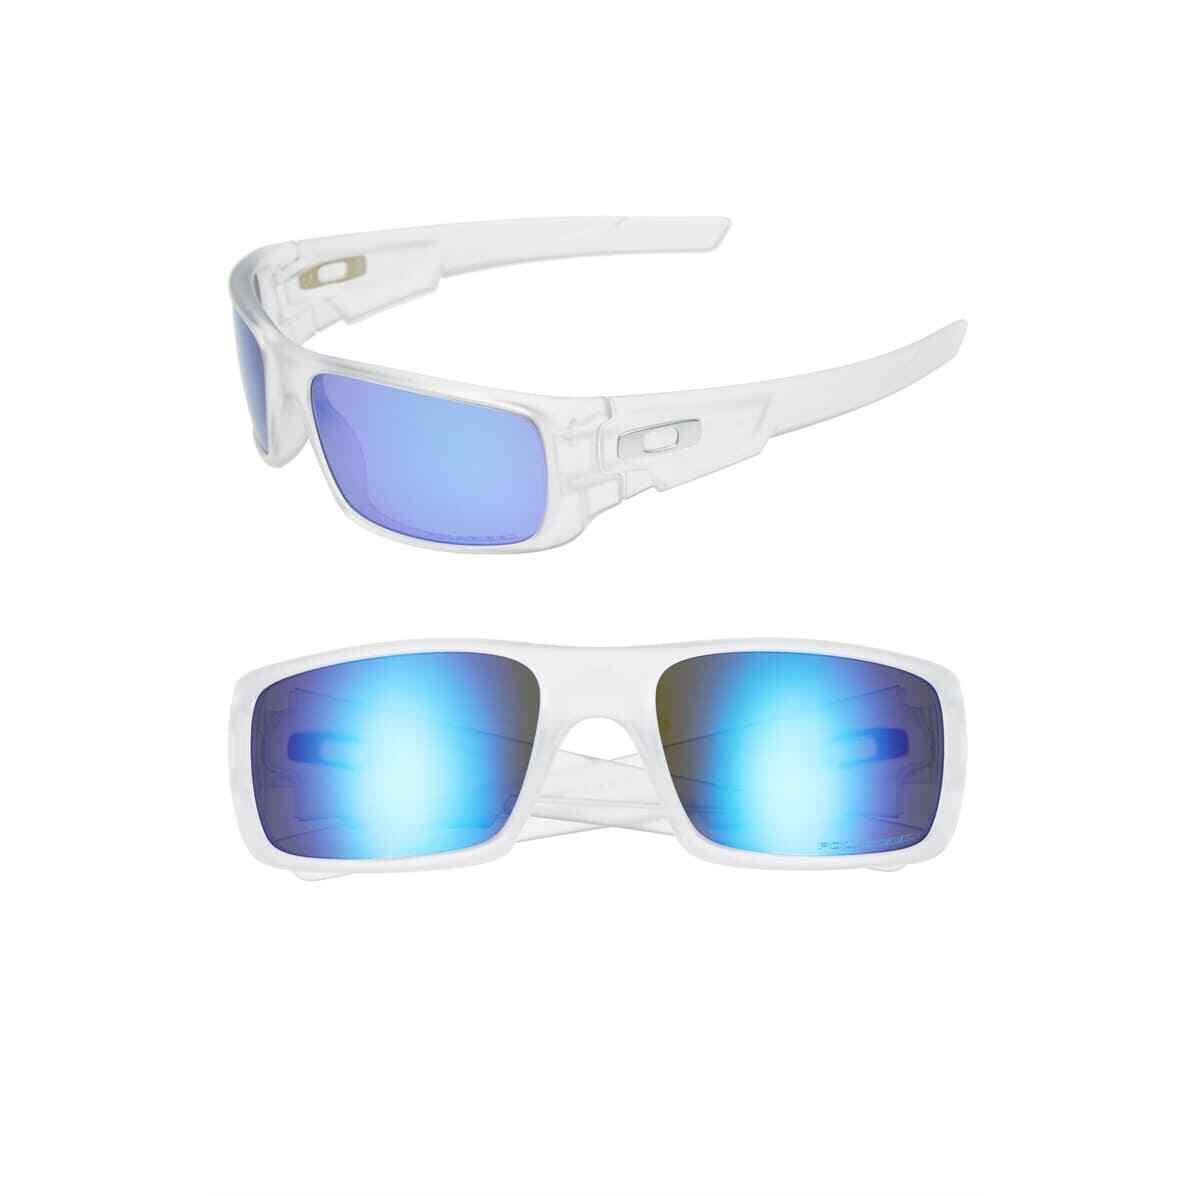 Oakley Crankshaft Violet Iridium Polar w/ Matte Clear Polarized Sunglasses S1012 - Clear Frame